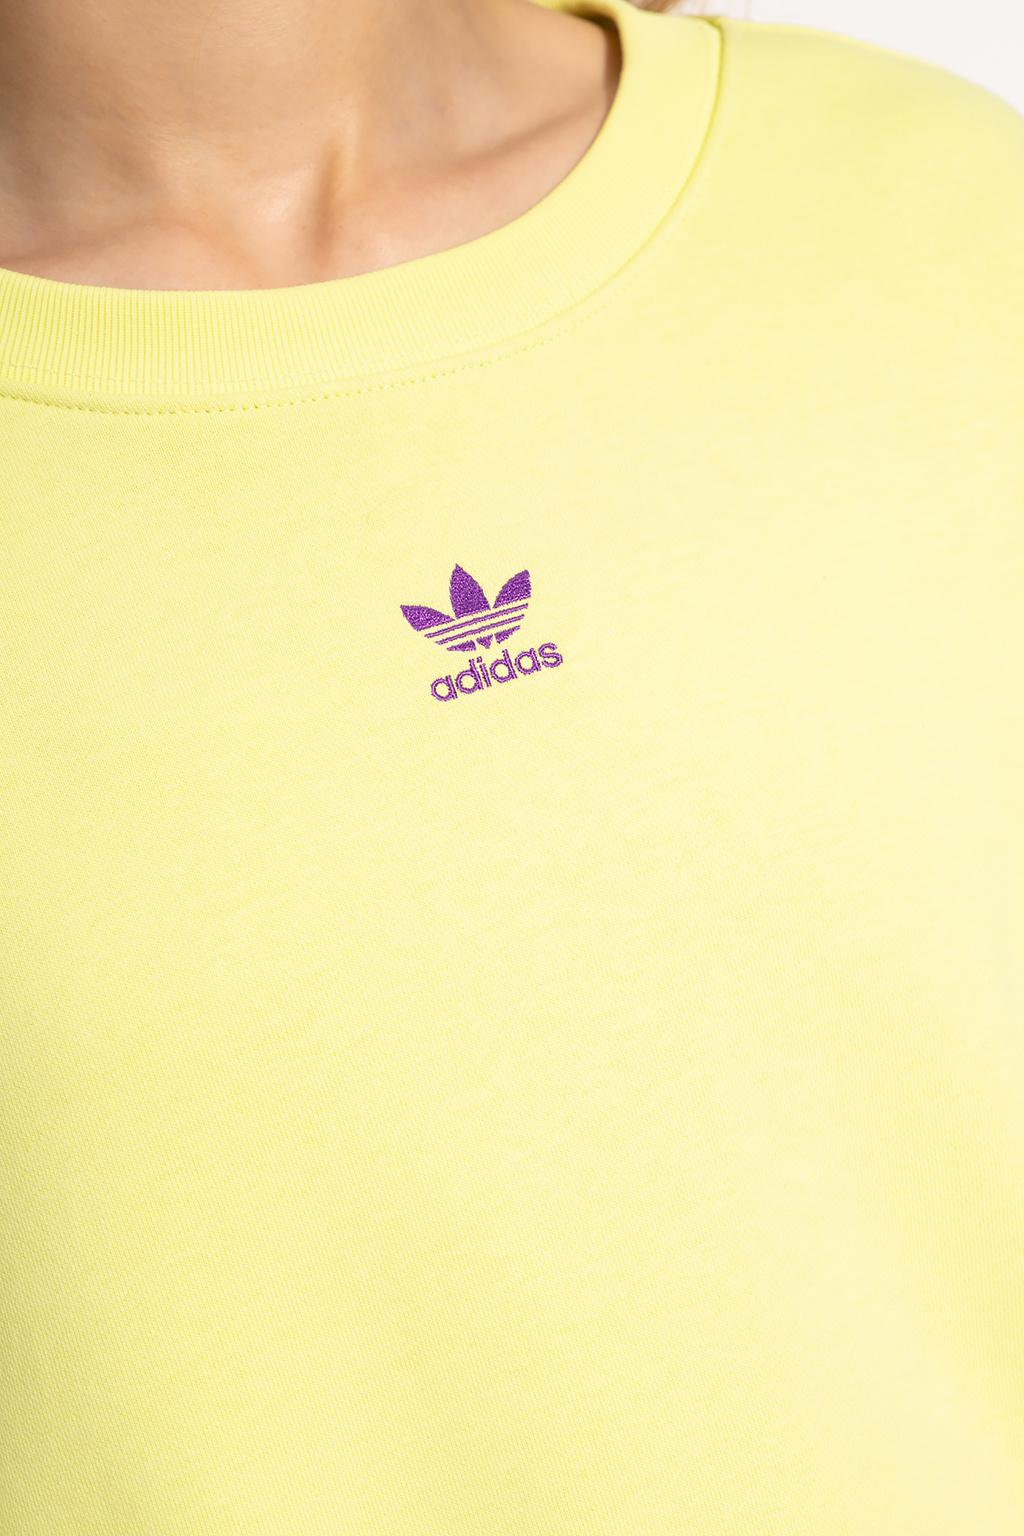 Logo Adidas Neon | lupon.gov.ph